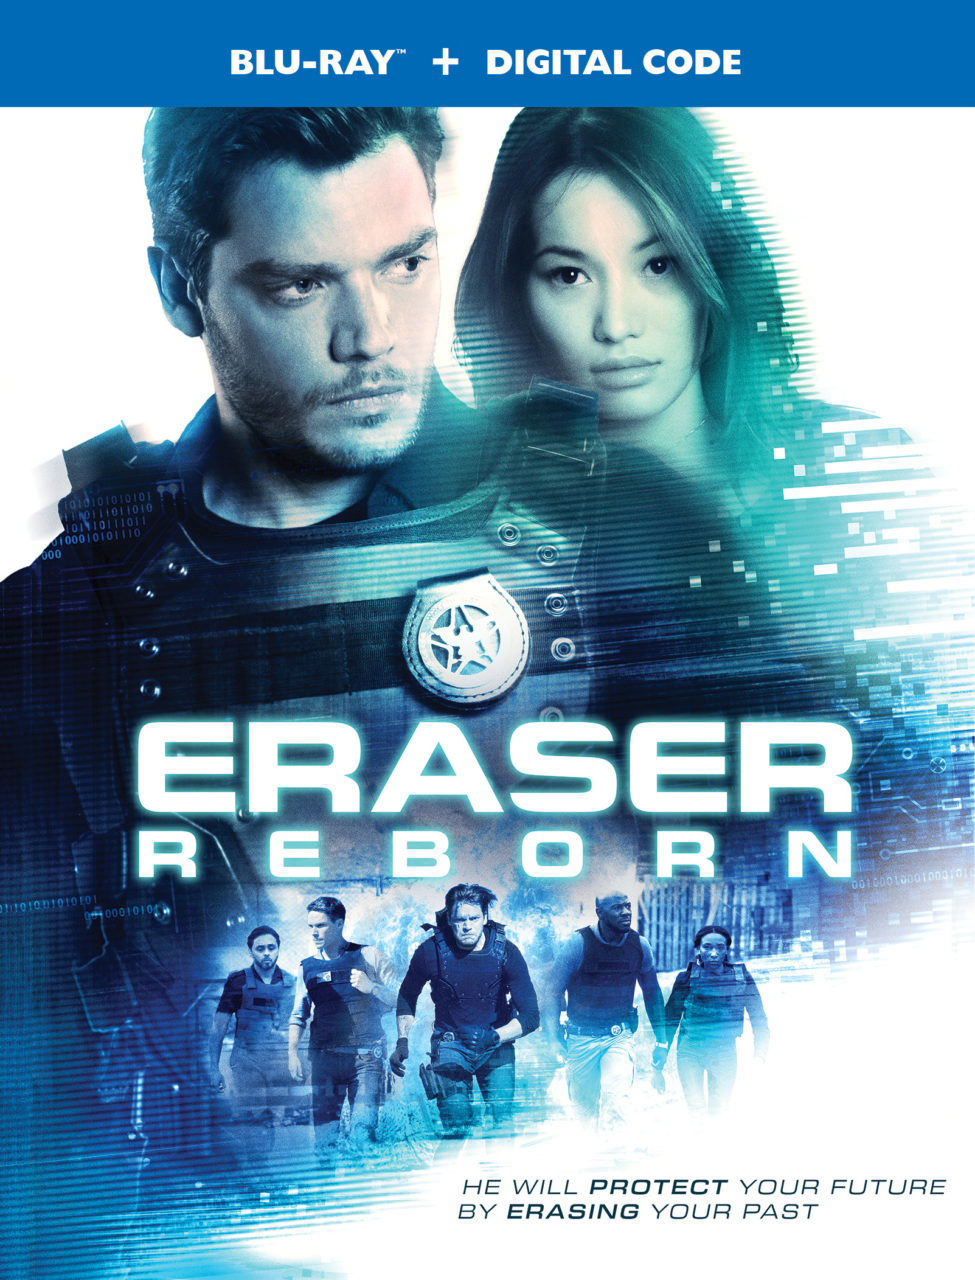 Eraser: Reborn Blu-Ray Combo Pack cover (Warner Bros. Home Entertainment)